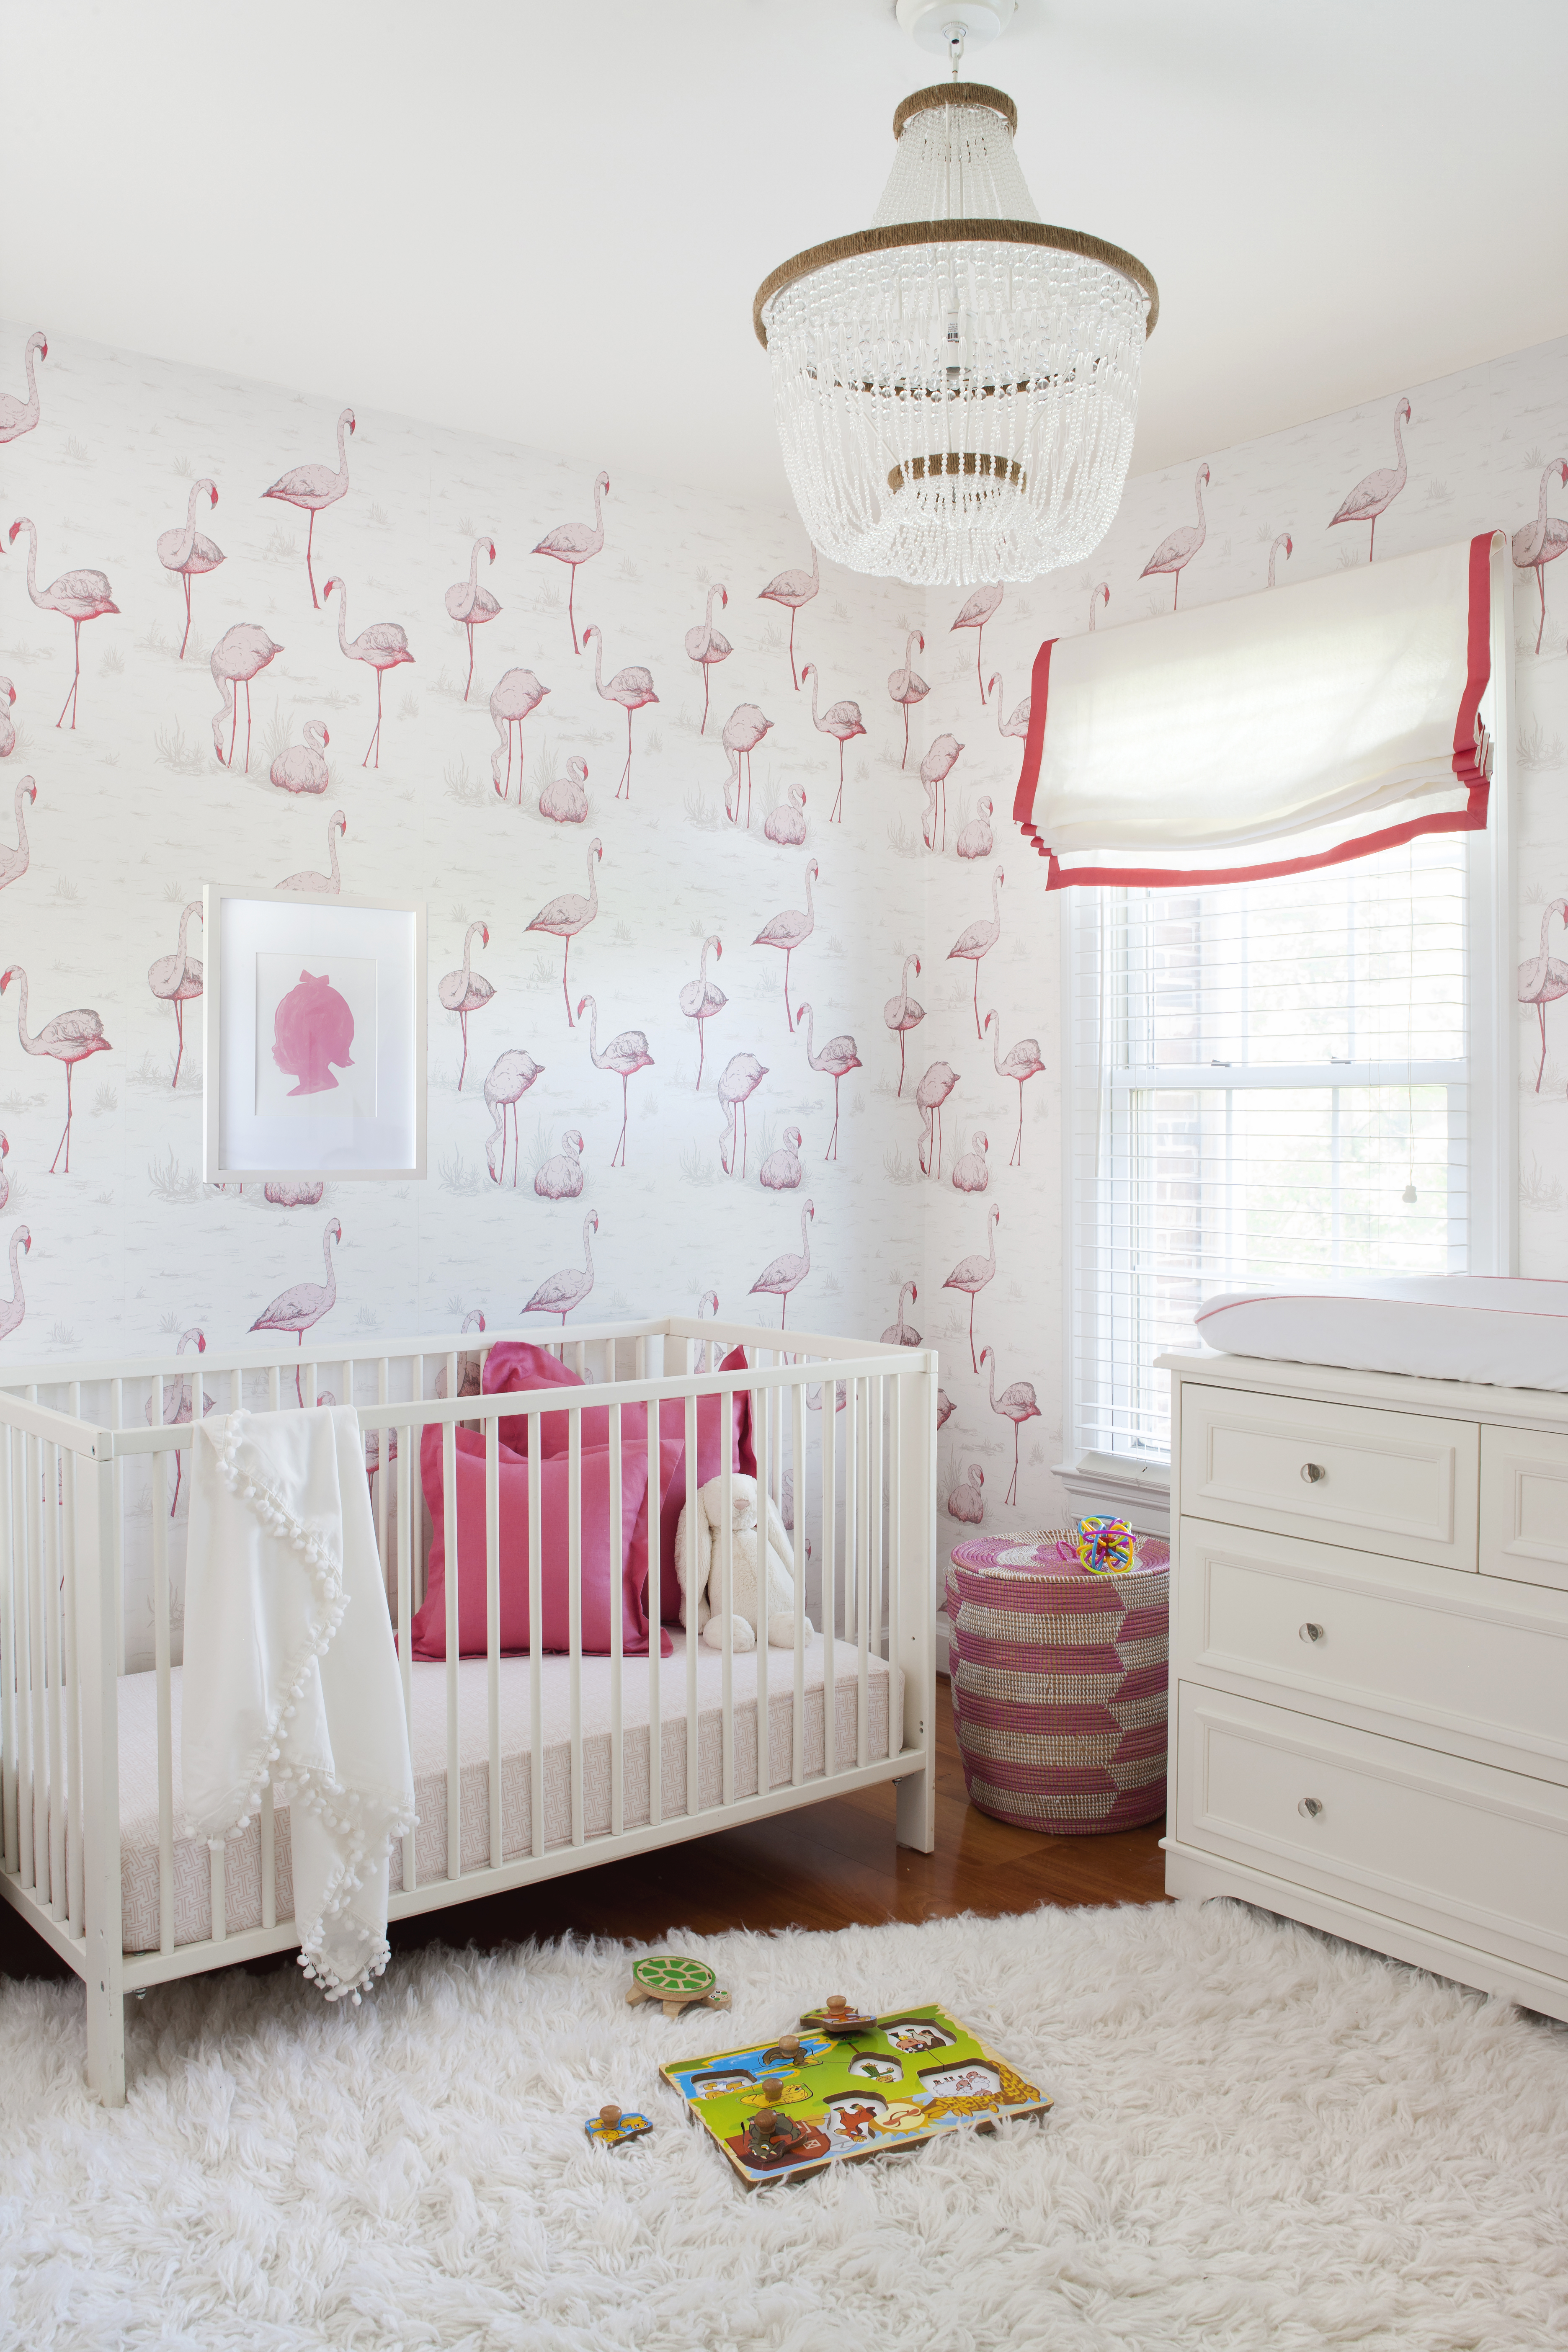 modern baby room wallpaper